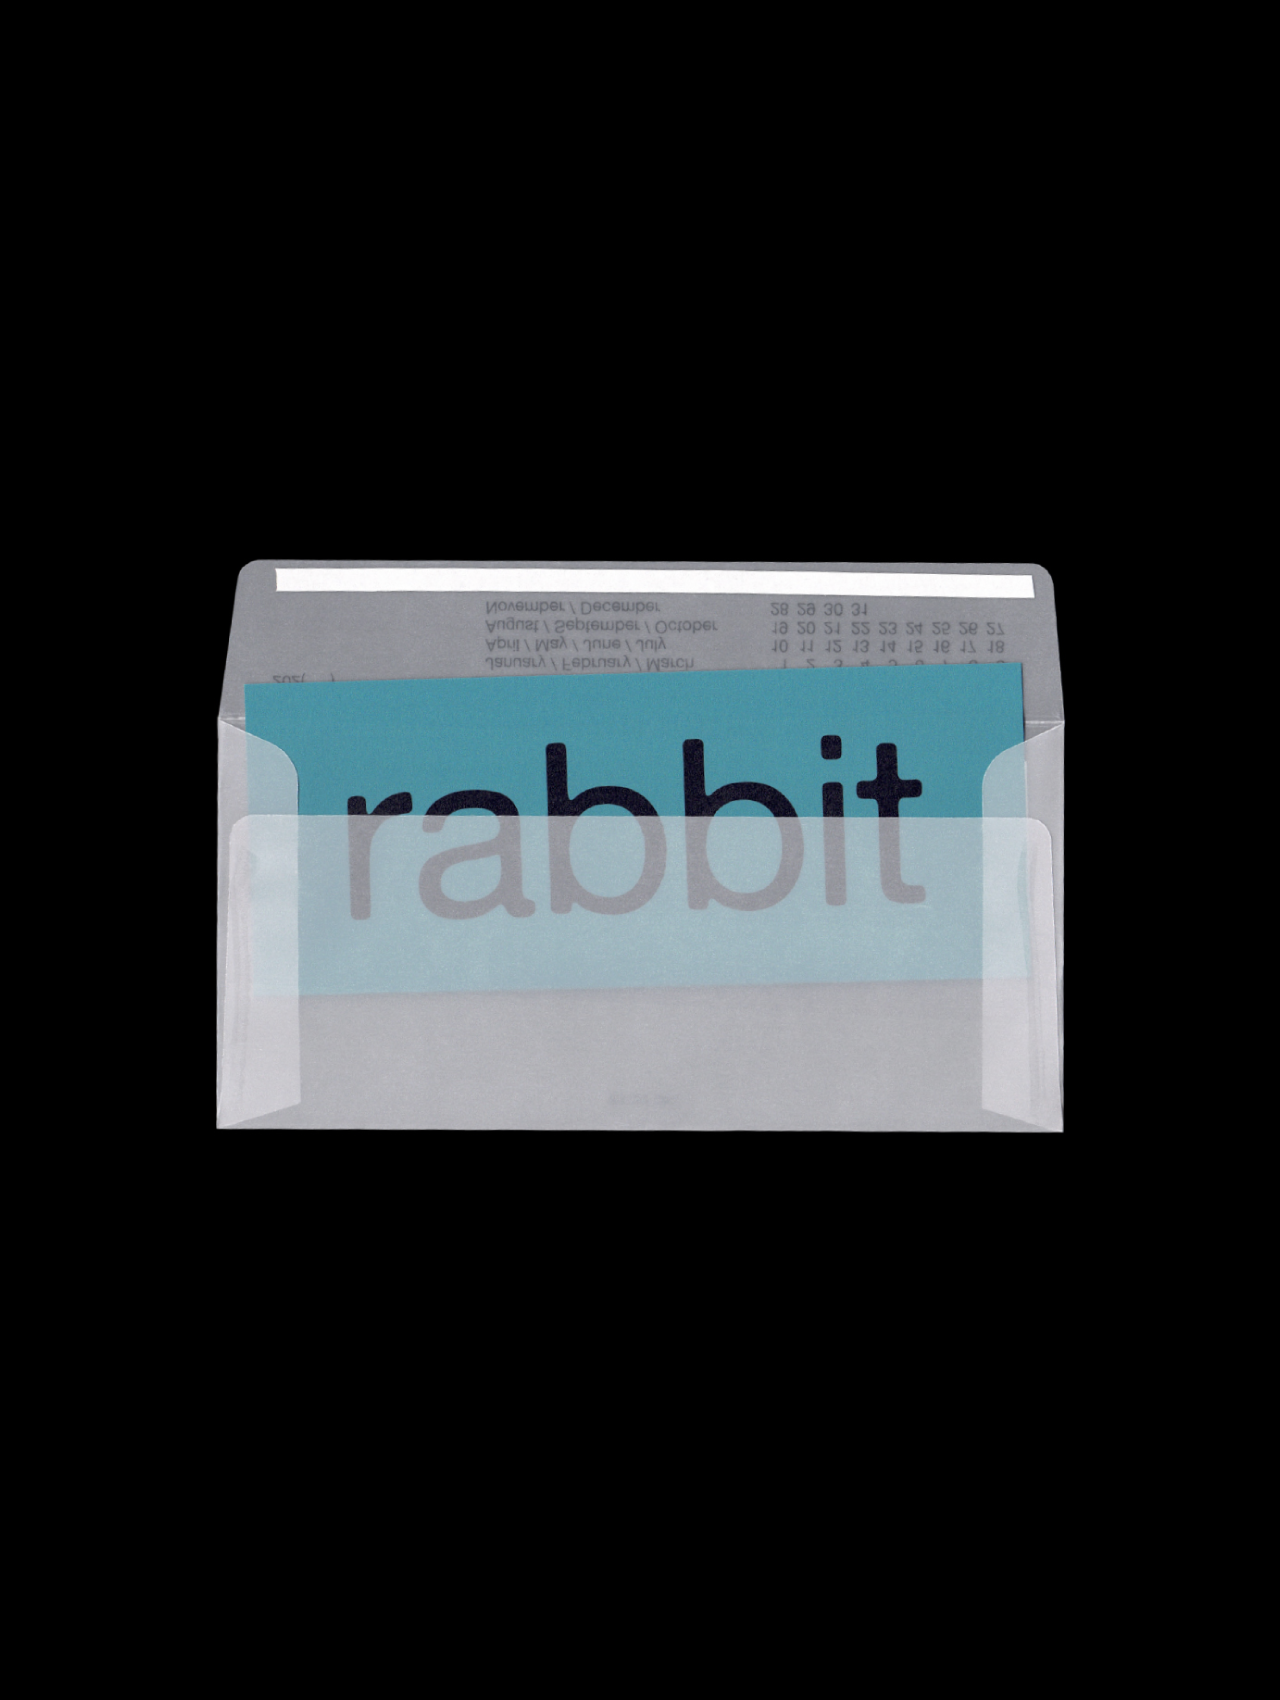 Vocabulary Card - rabbit